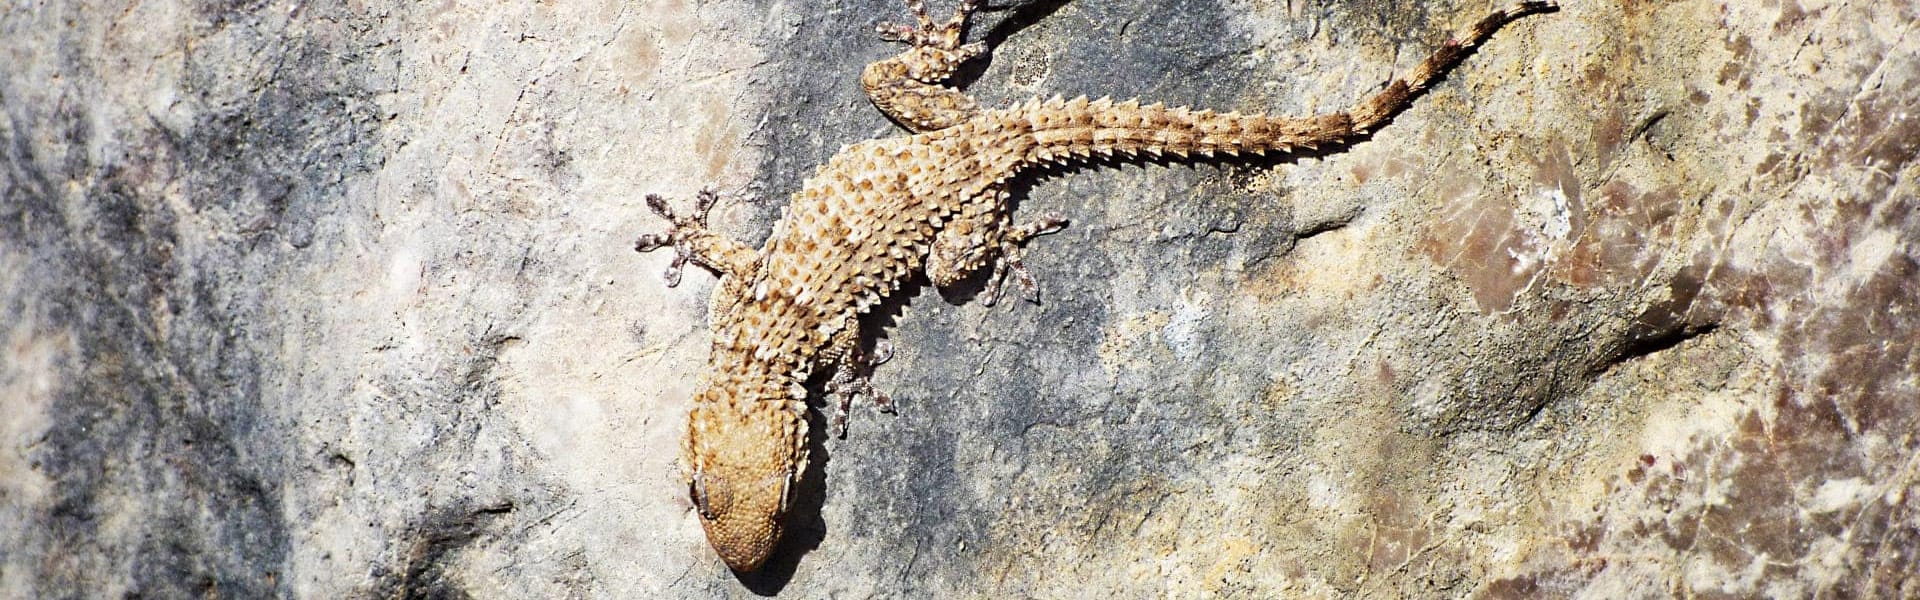 Galapagos Island Geckos - The Gecko of Galapagos